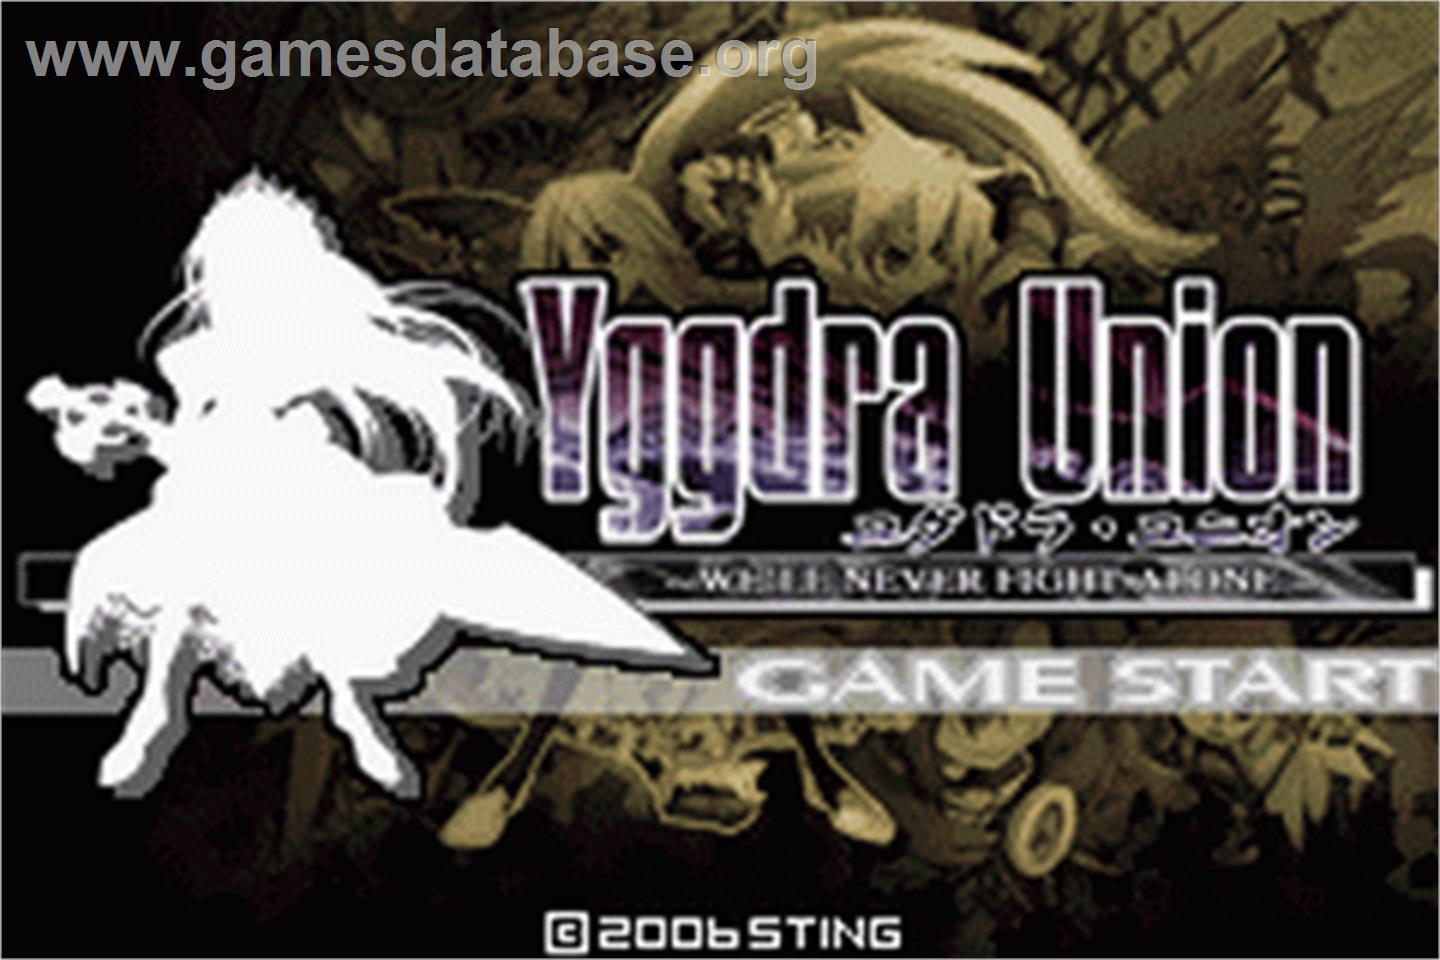 Yggdra Union - Nintendo Game Boy Advance - Artwork - Title Screen